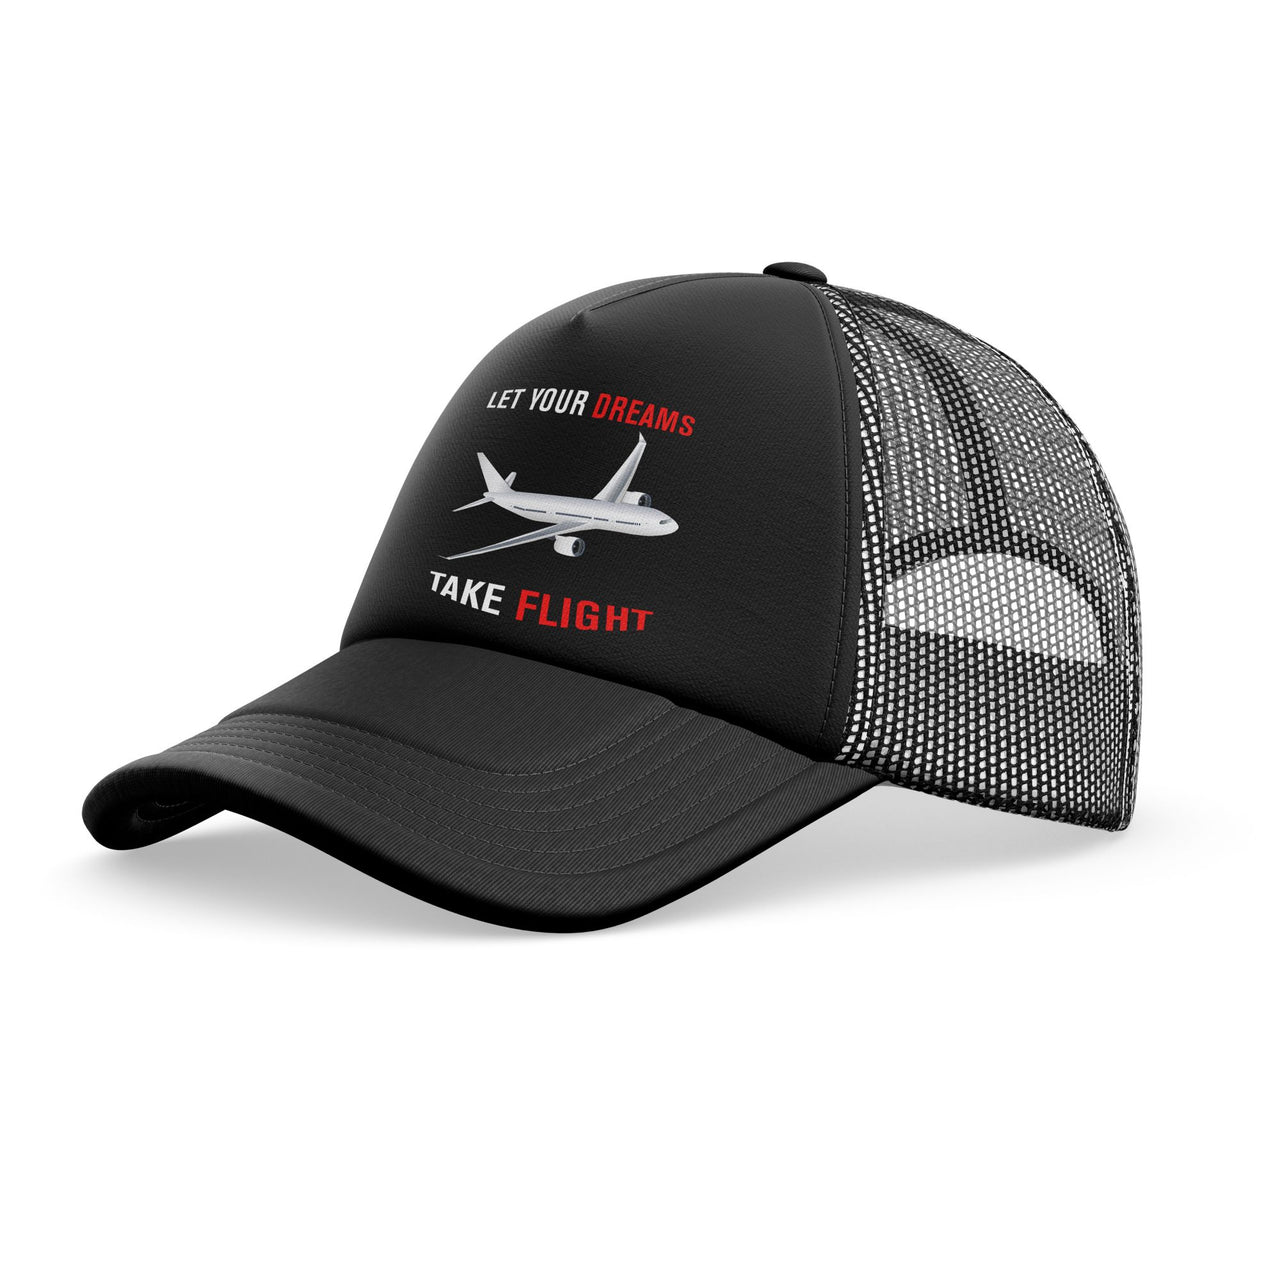 Let Your Dreams Take Flight Designed Trucker Caps & Hats